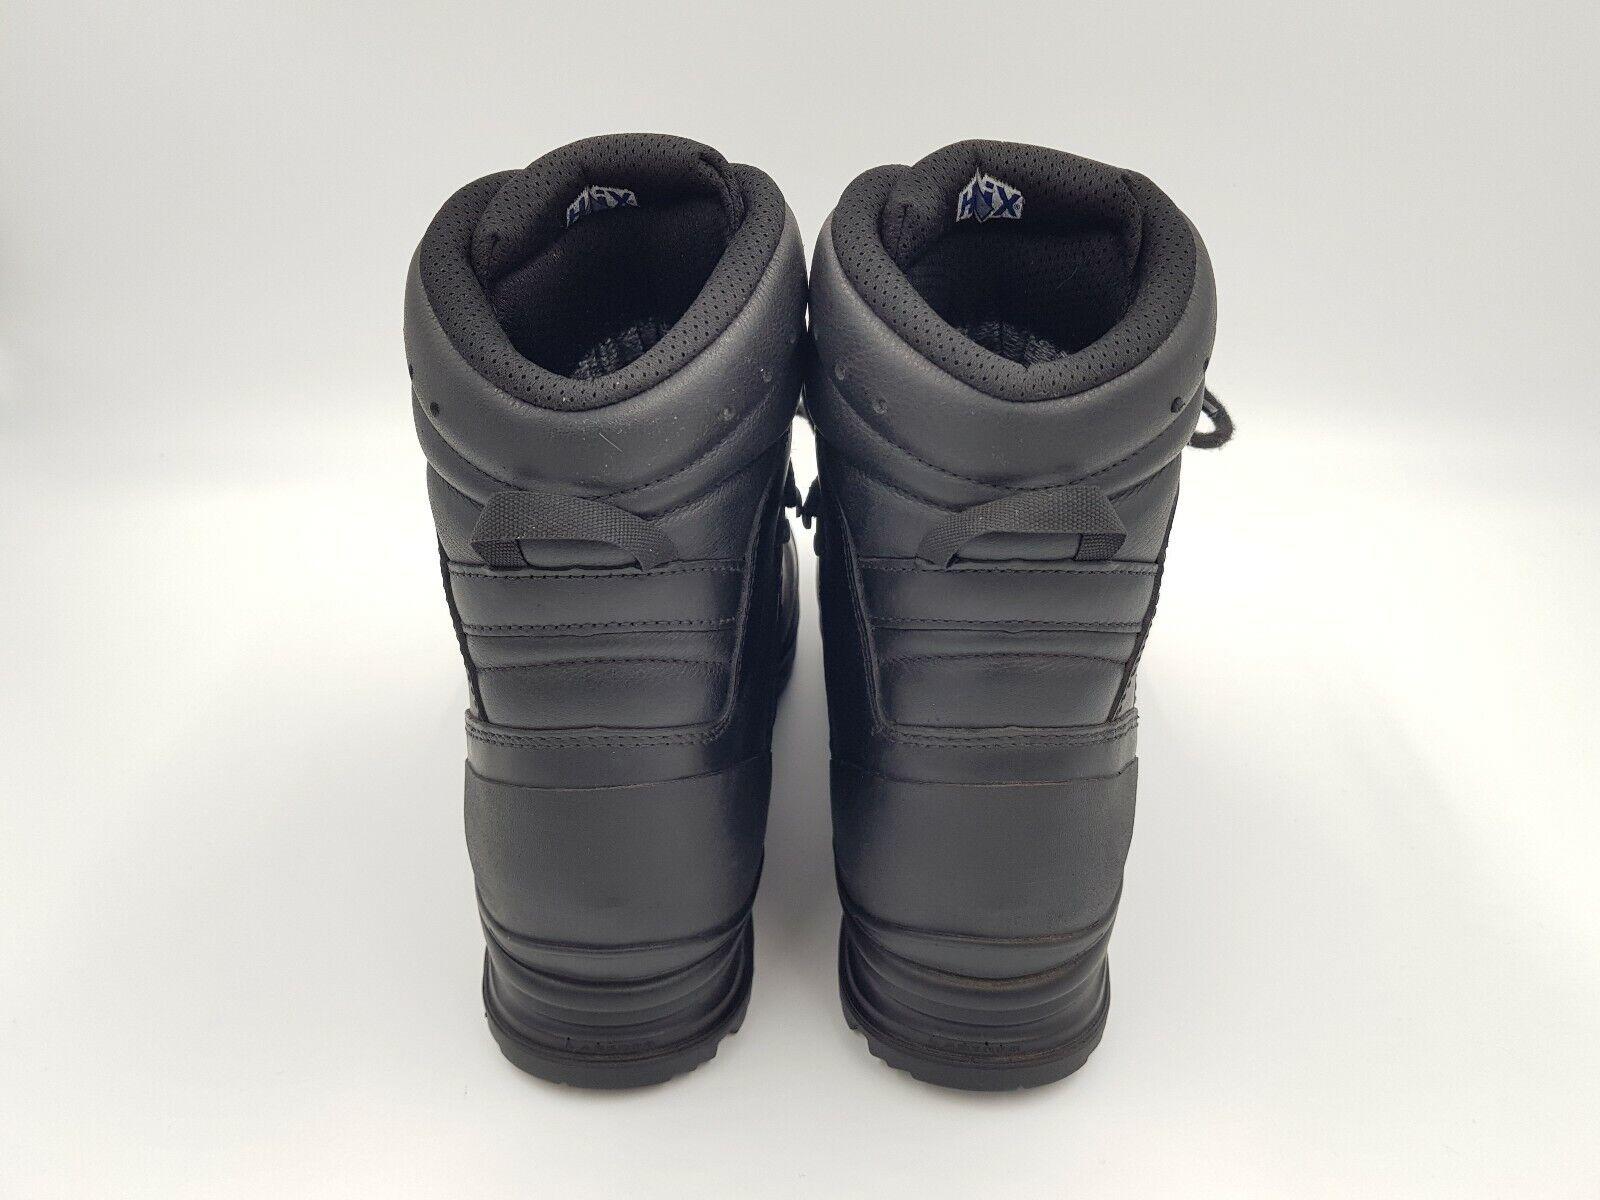 Haix Black Combat Boots - Brand New